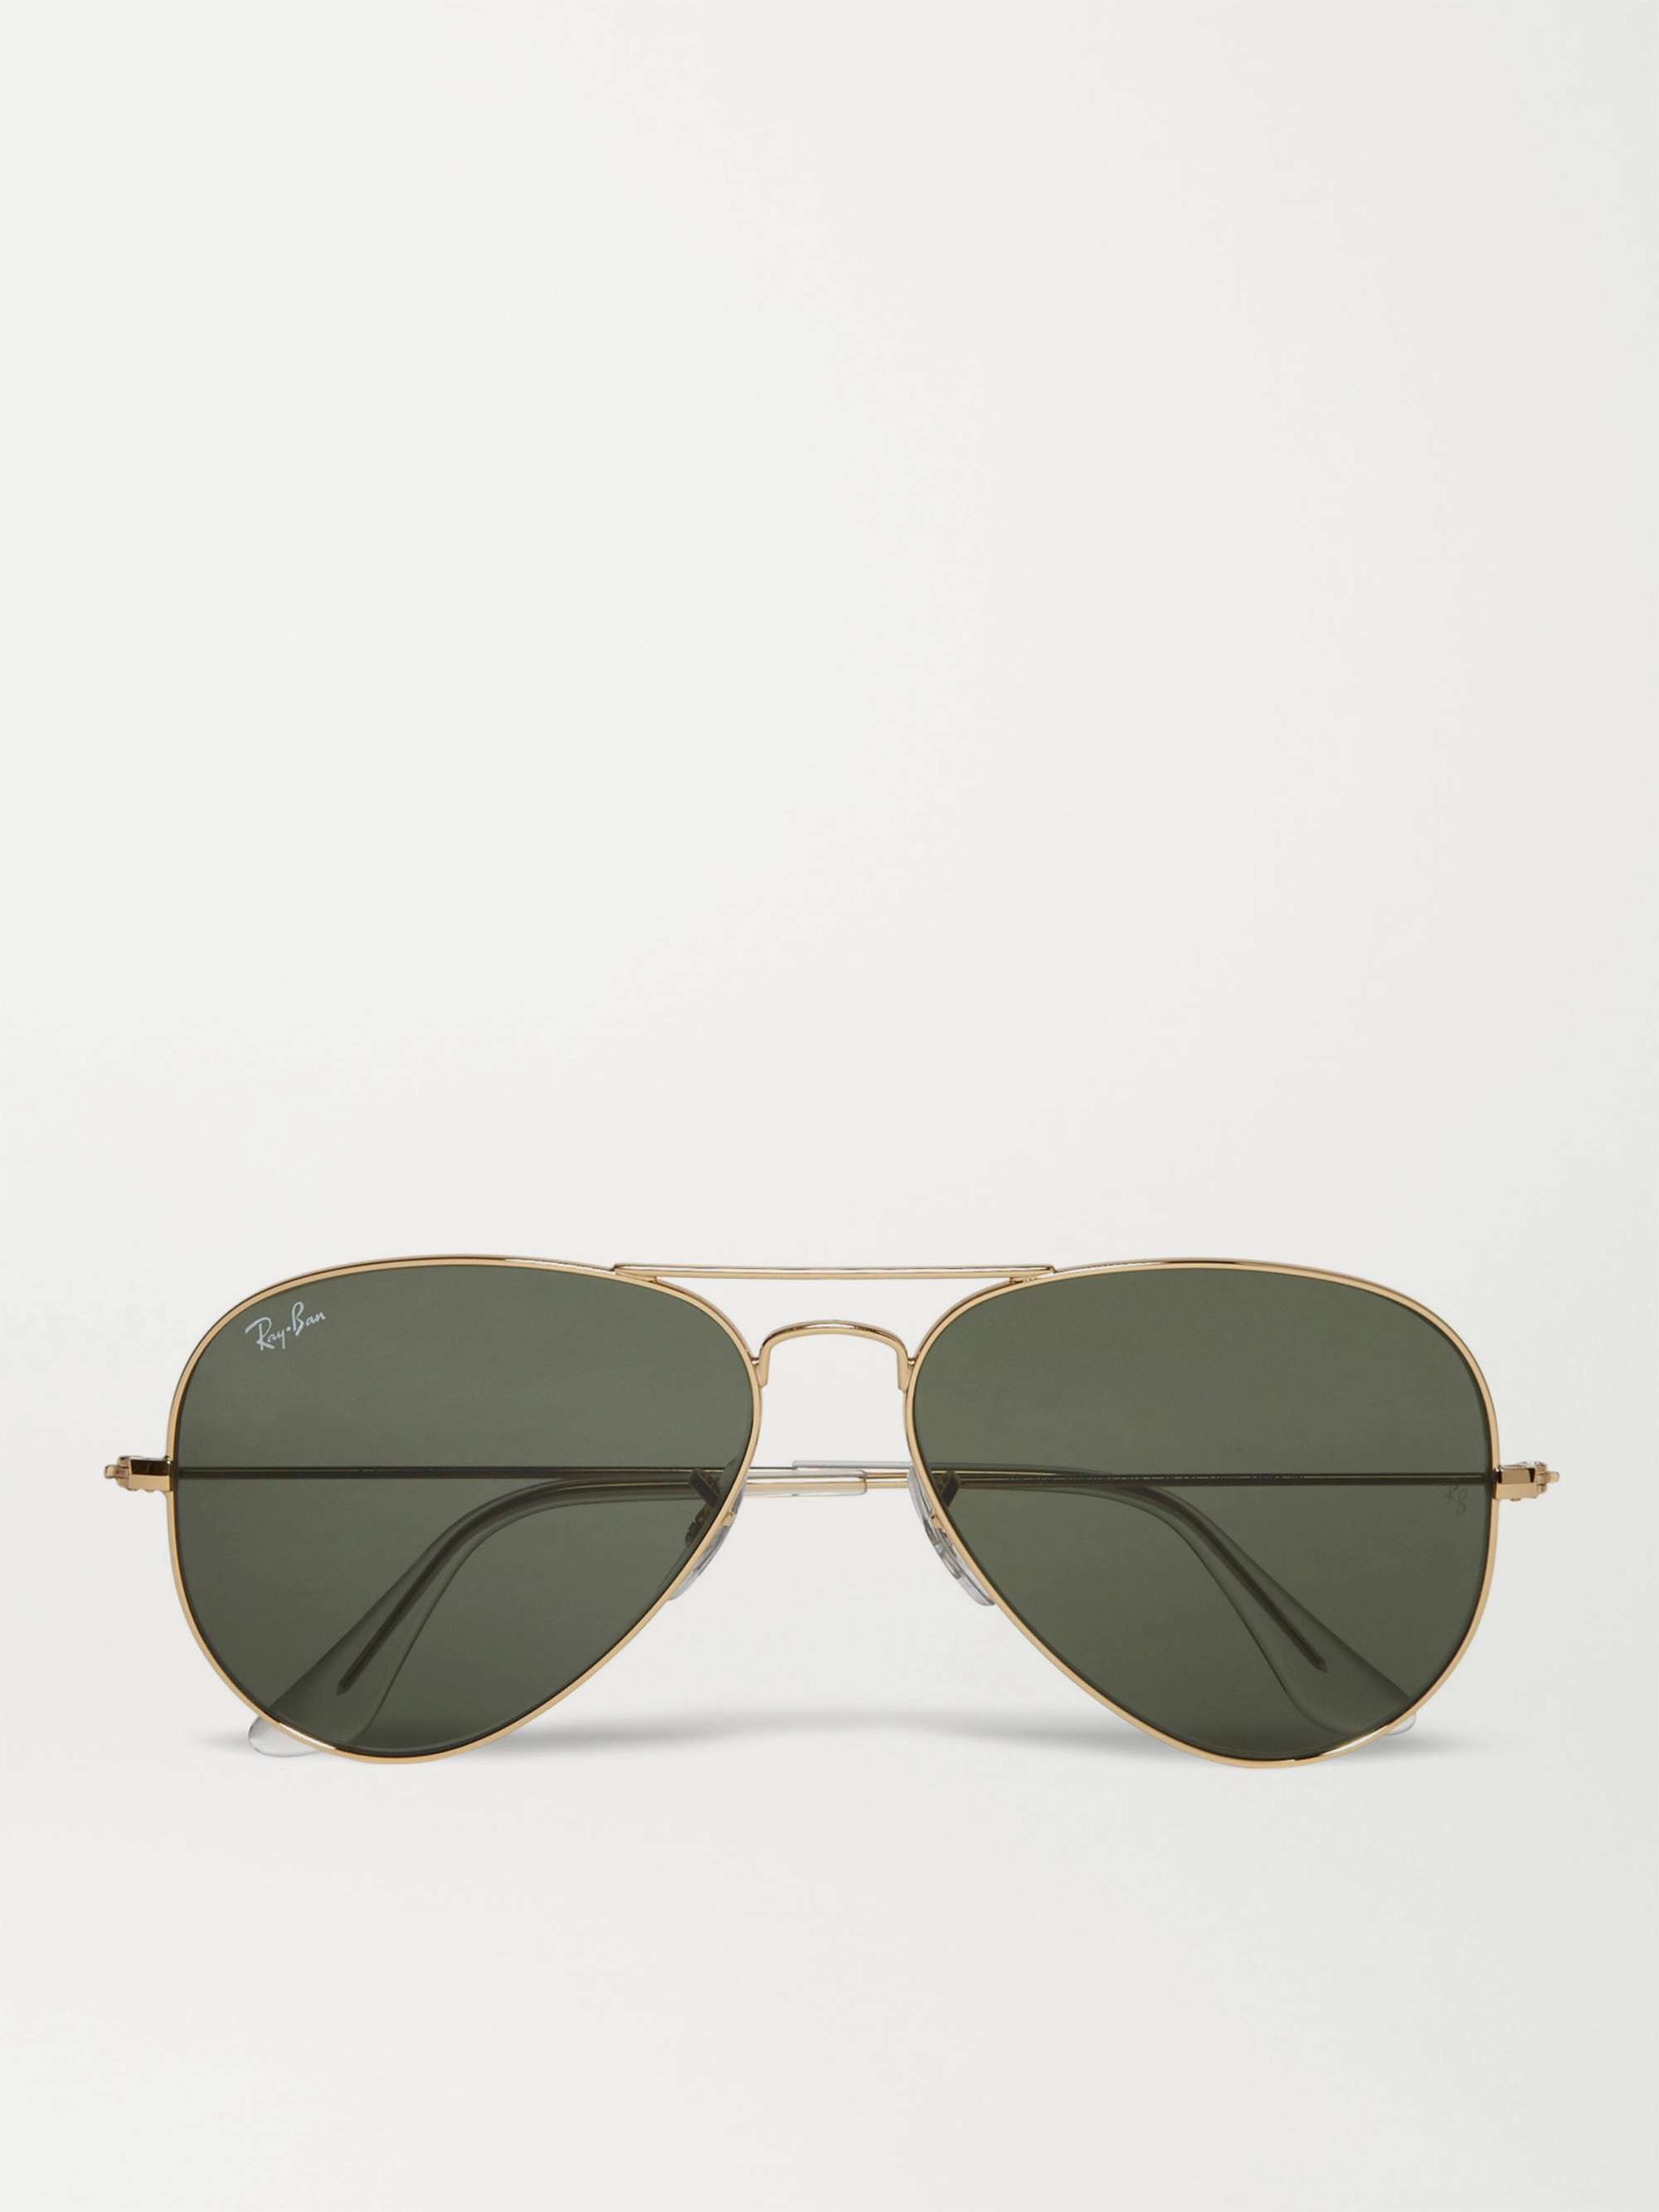 RAY-BAN Aviator Gold-Tone Sunglasses | MR PORTER